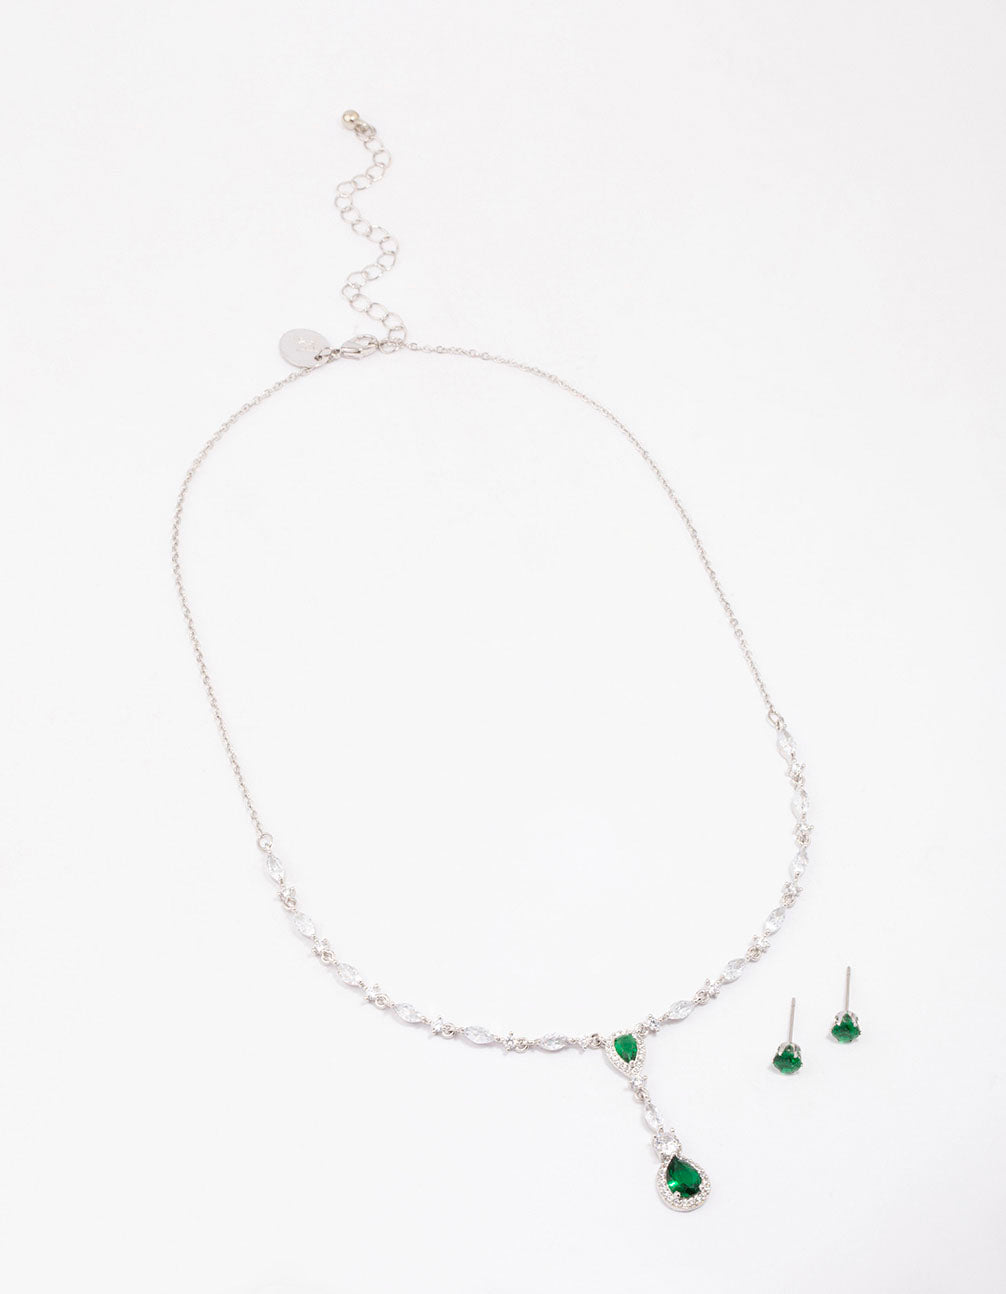 Green Jewellery - Earrings, Necklaces & More - Lovisa